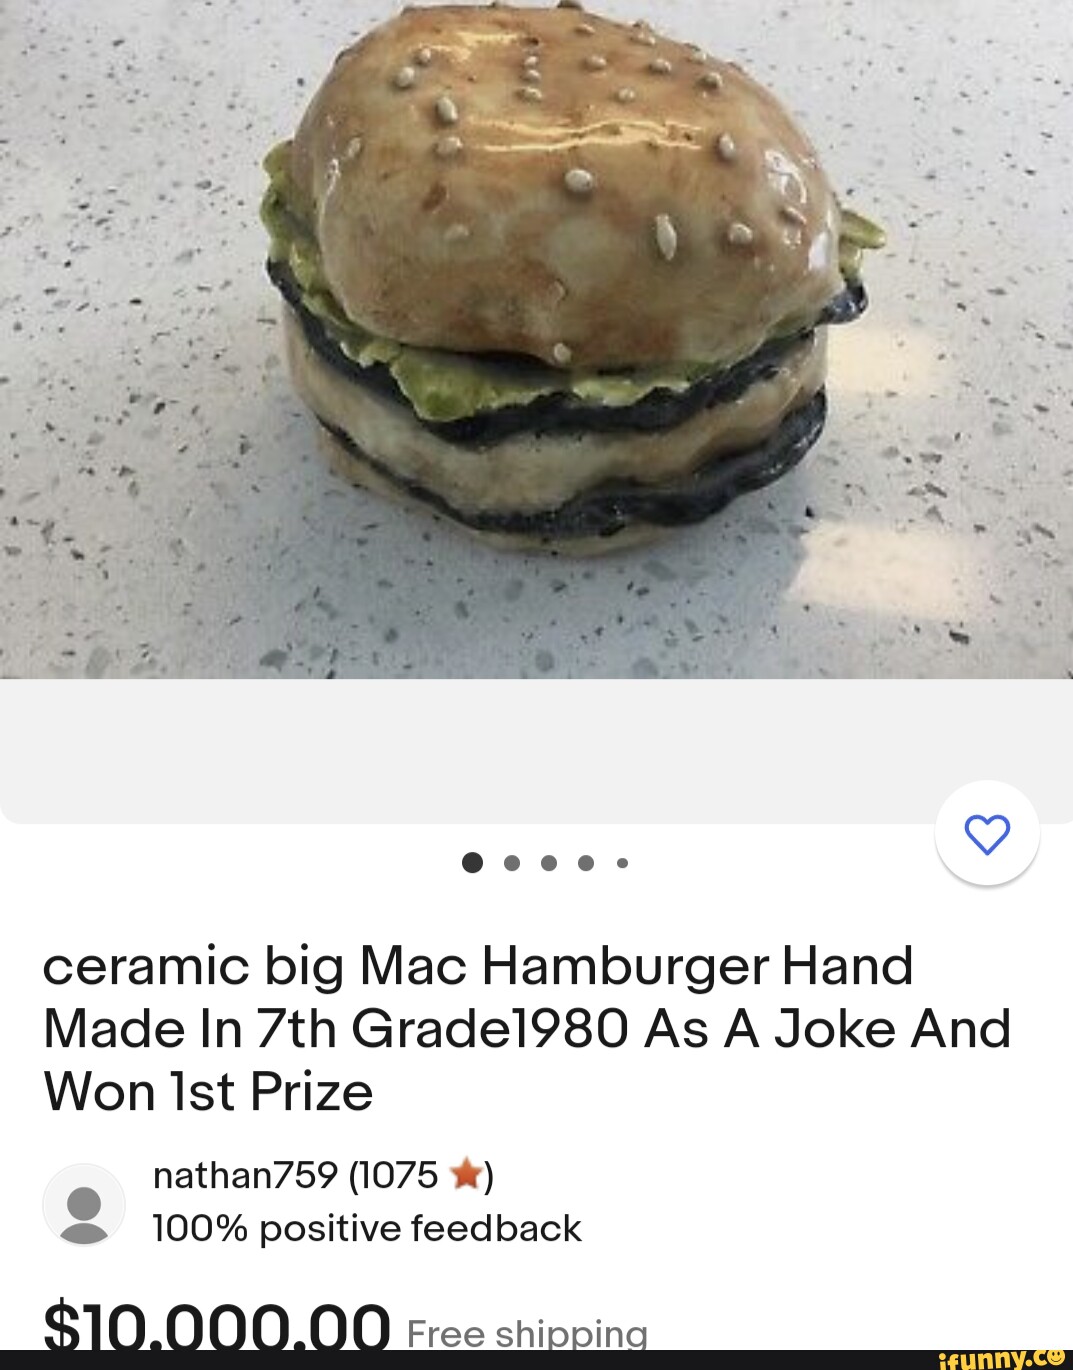 ceramic big Mac Hamburger Hand Made In Gradel980 As A Joke And Won lst Prize nathan759 (1075 we) @ 100% positive feedback 000.00 Free shipping